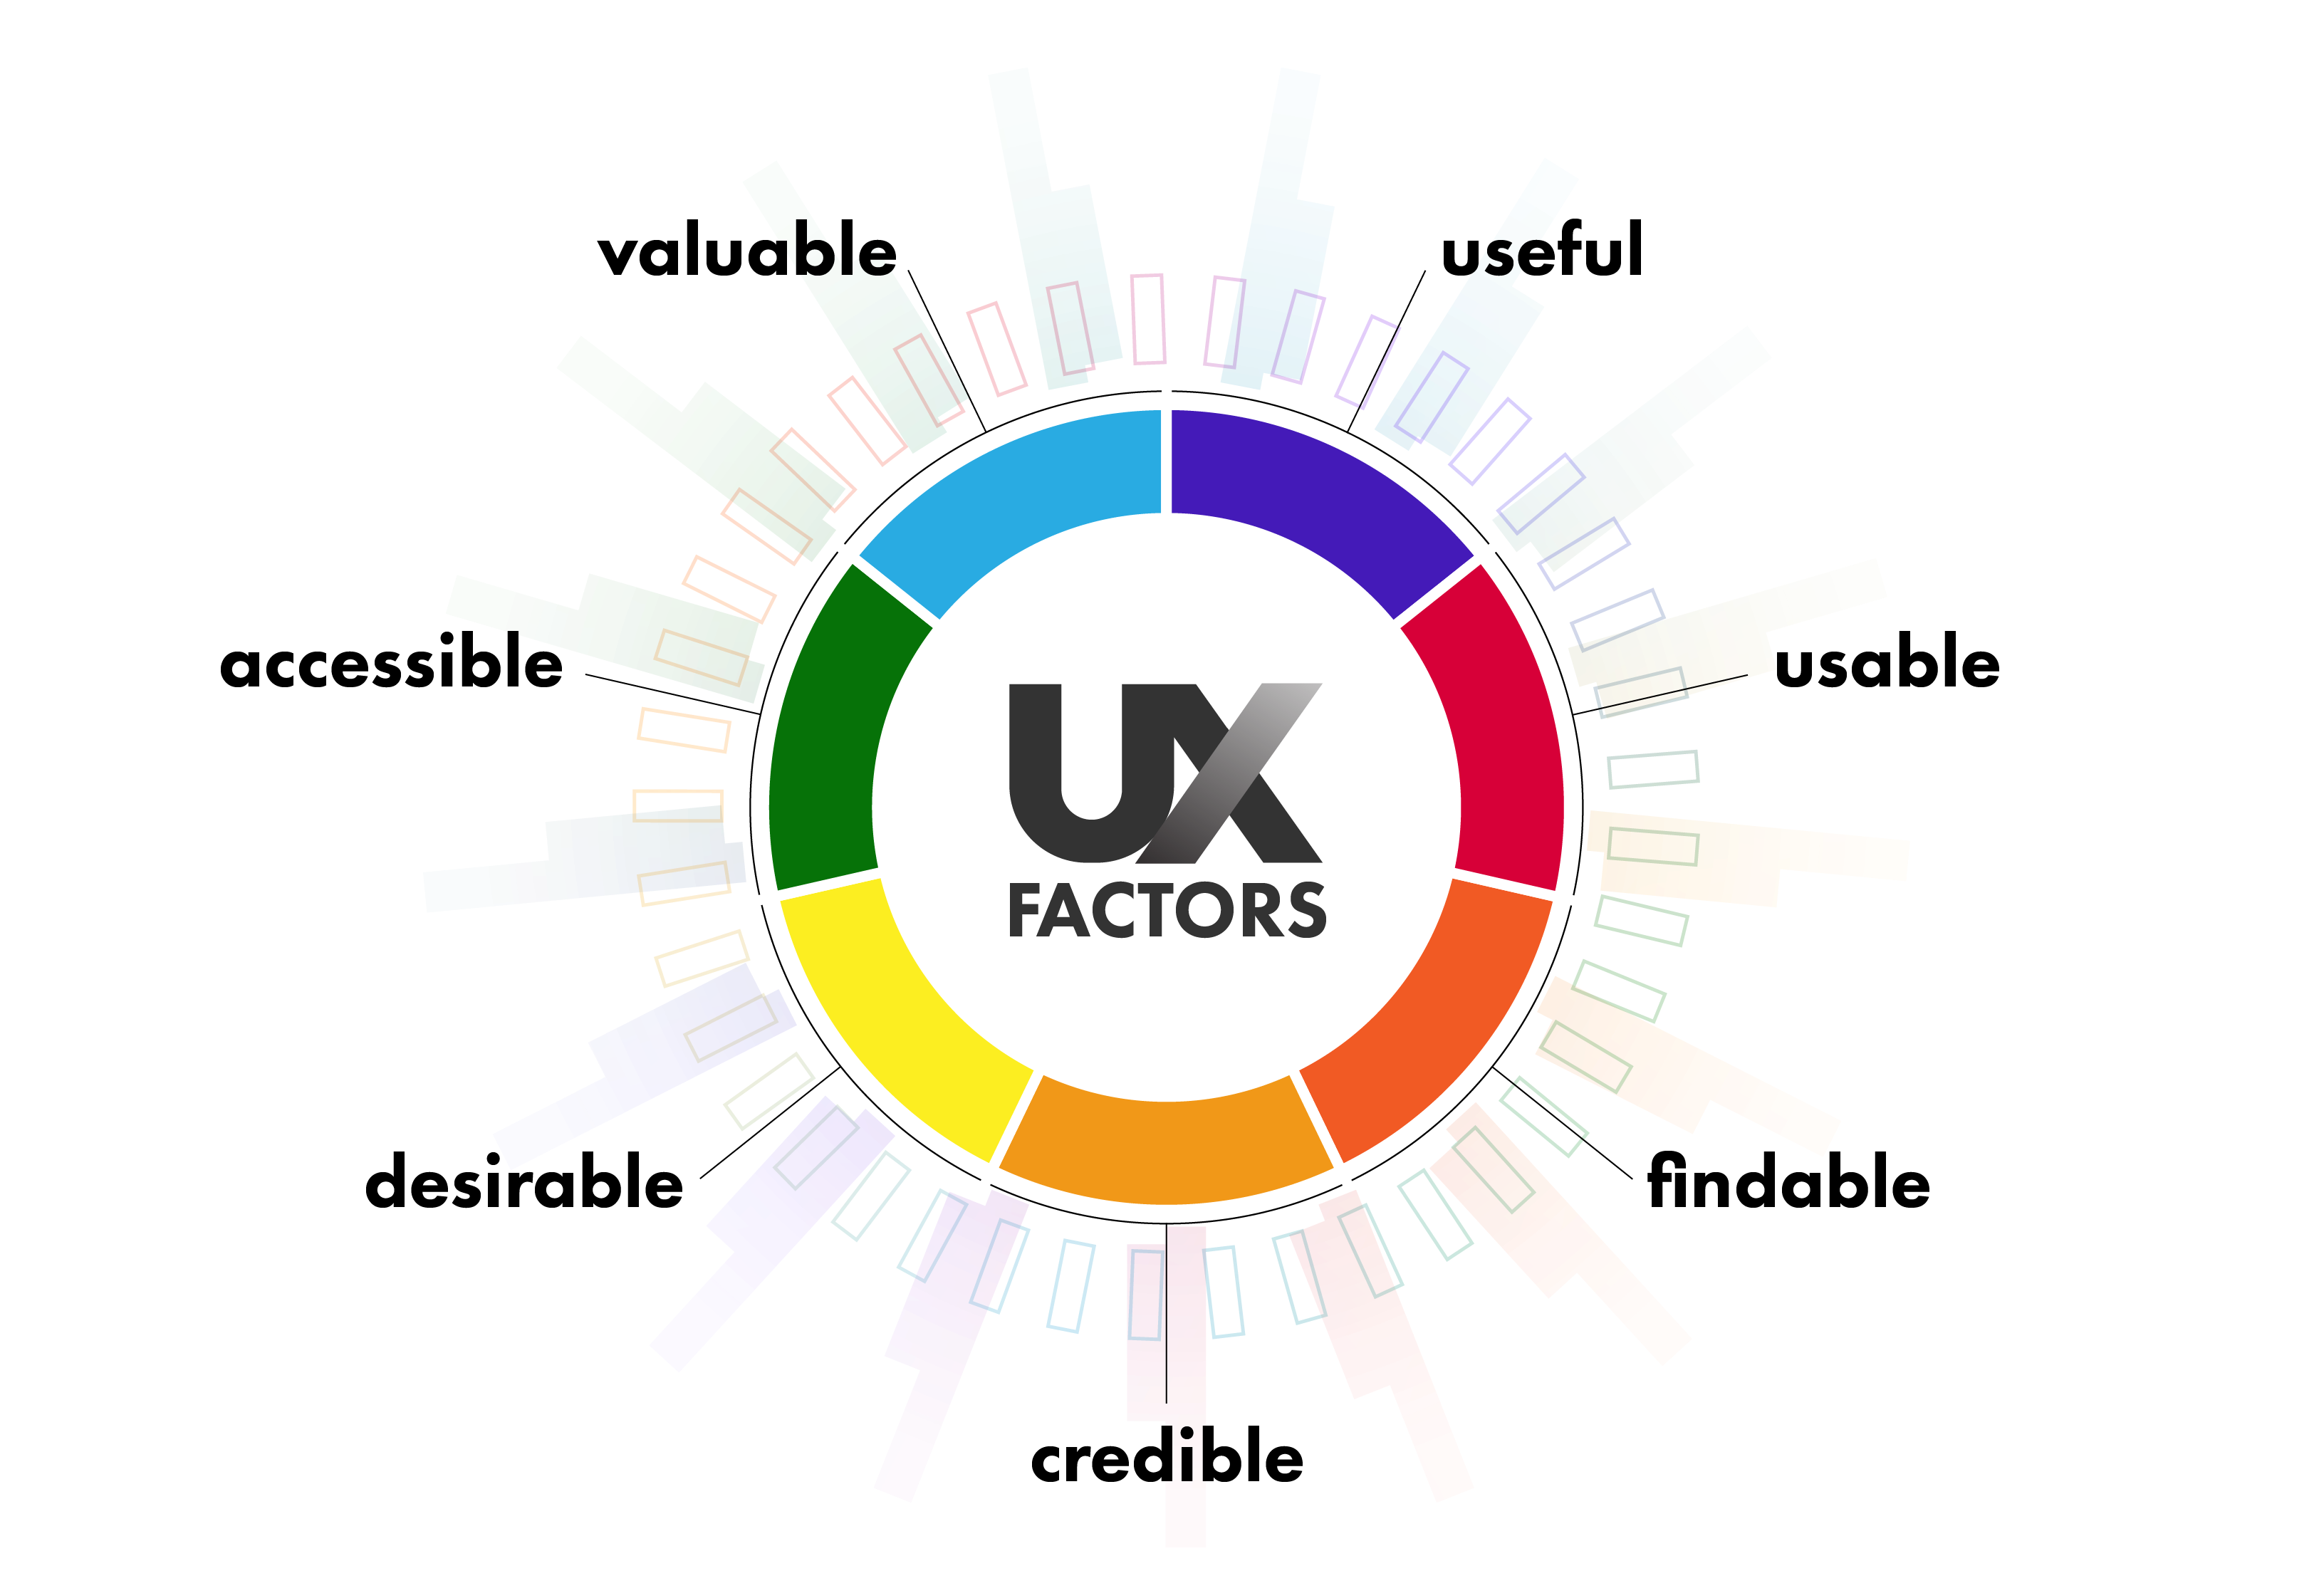 User Experience Factors